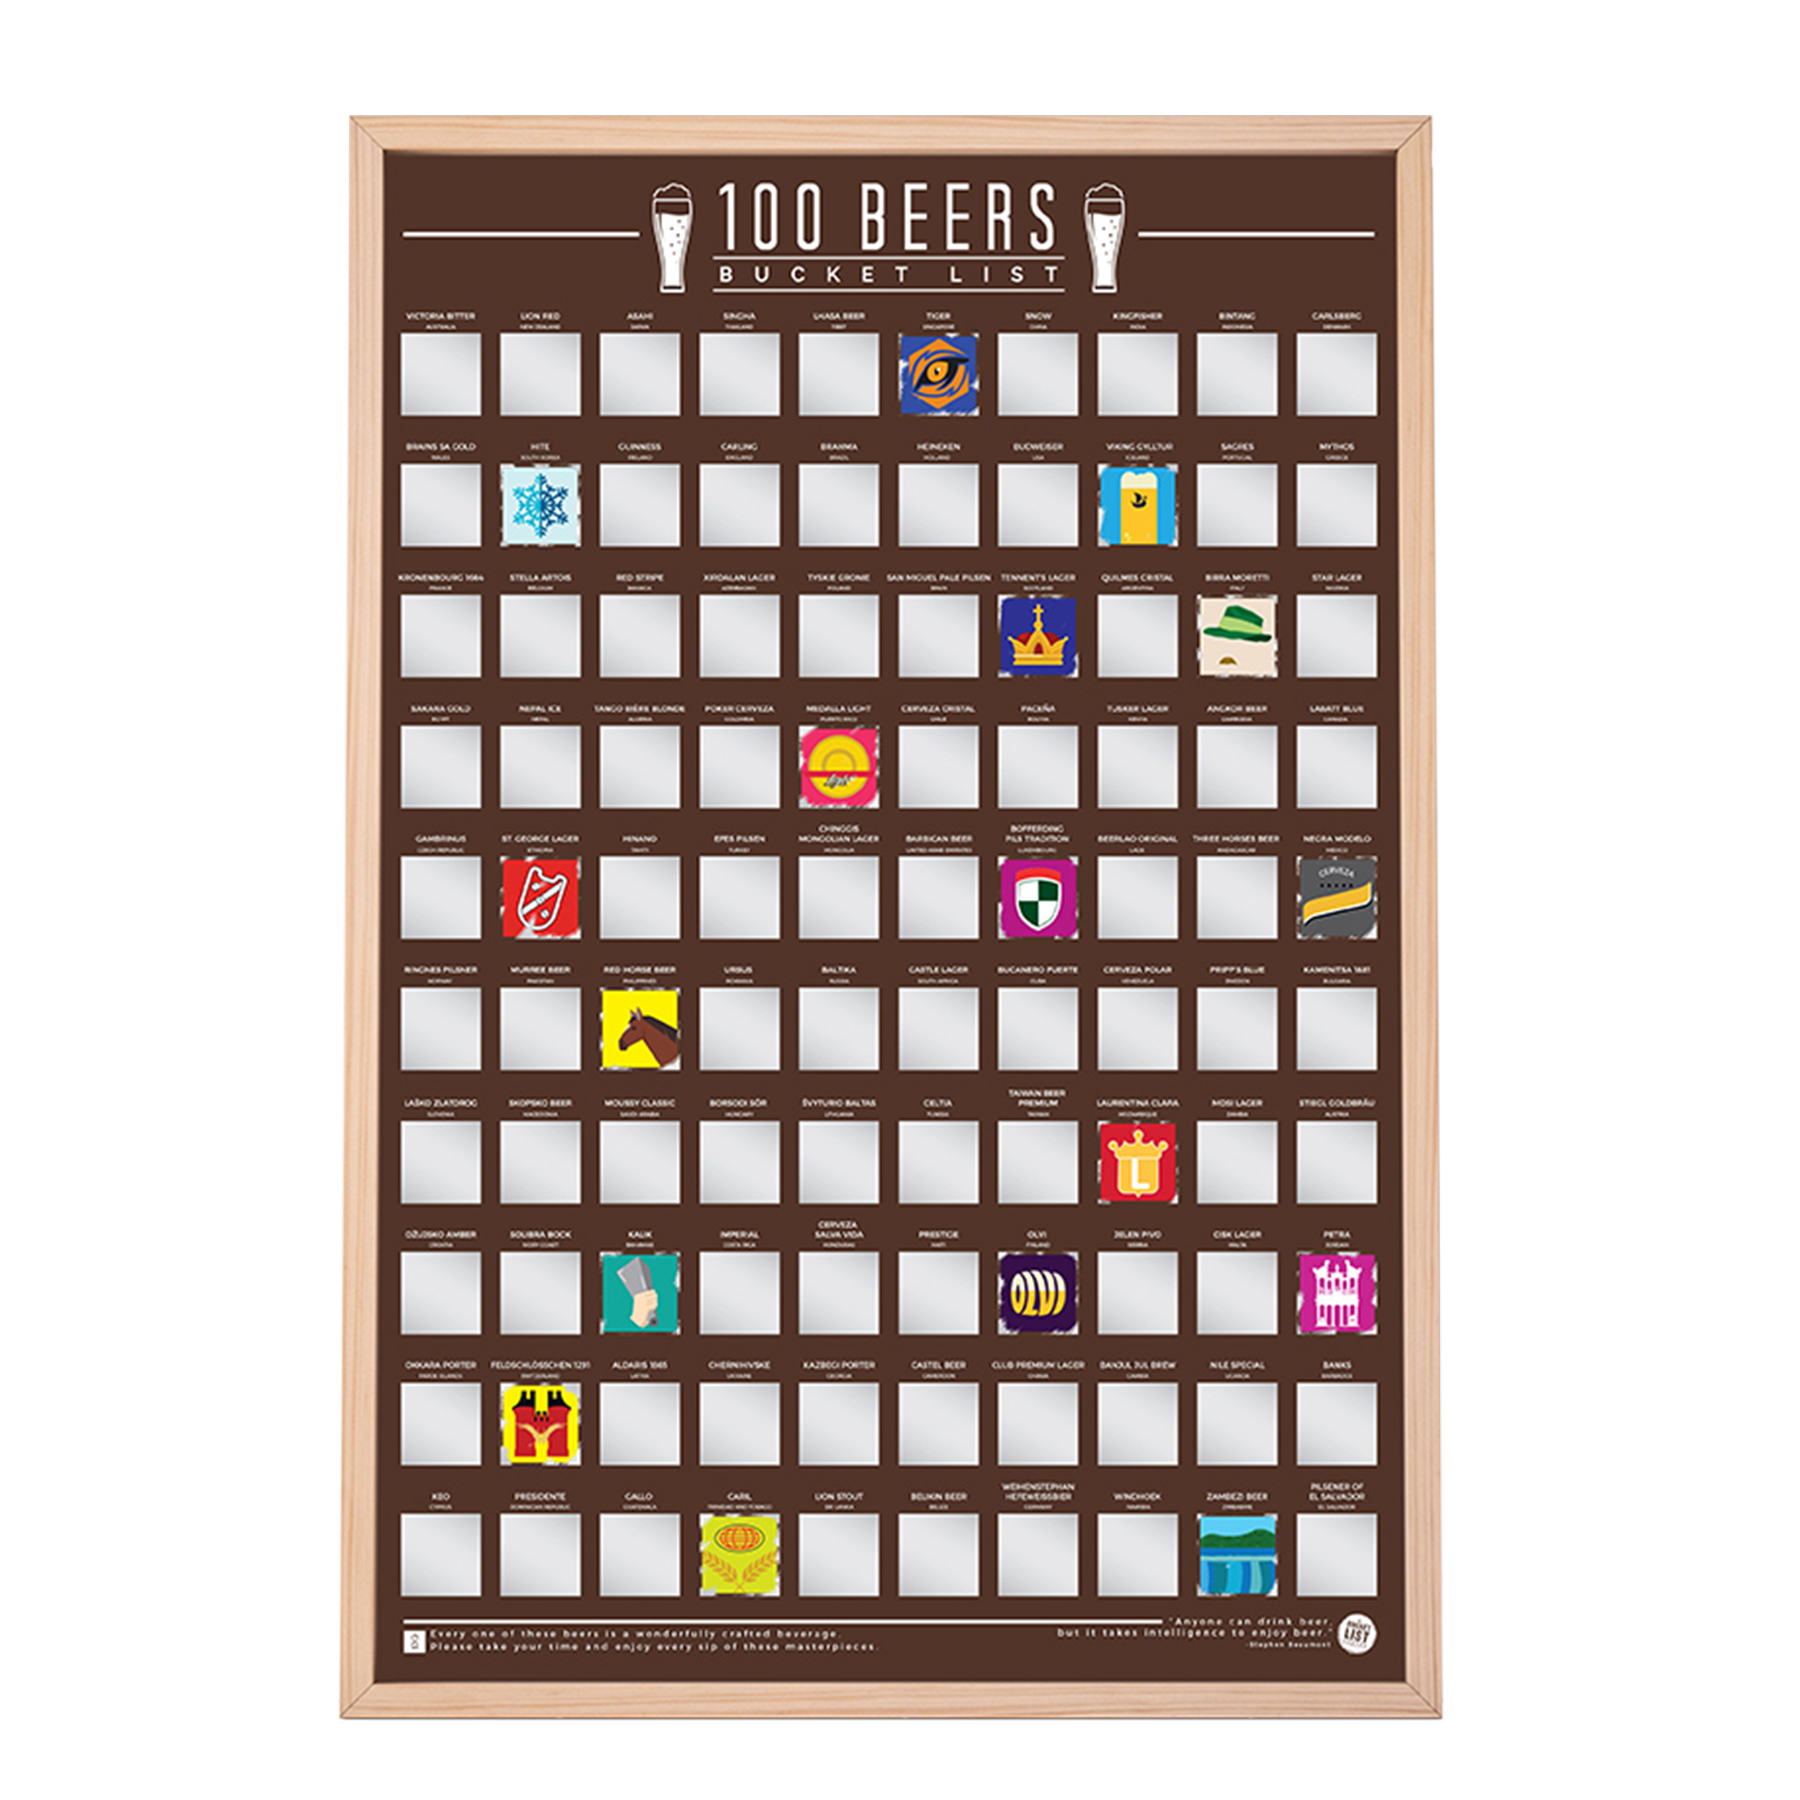 Rubbelkarte mit 100 internationalen Biersorten